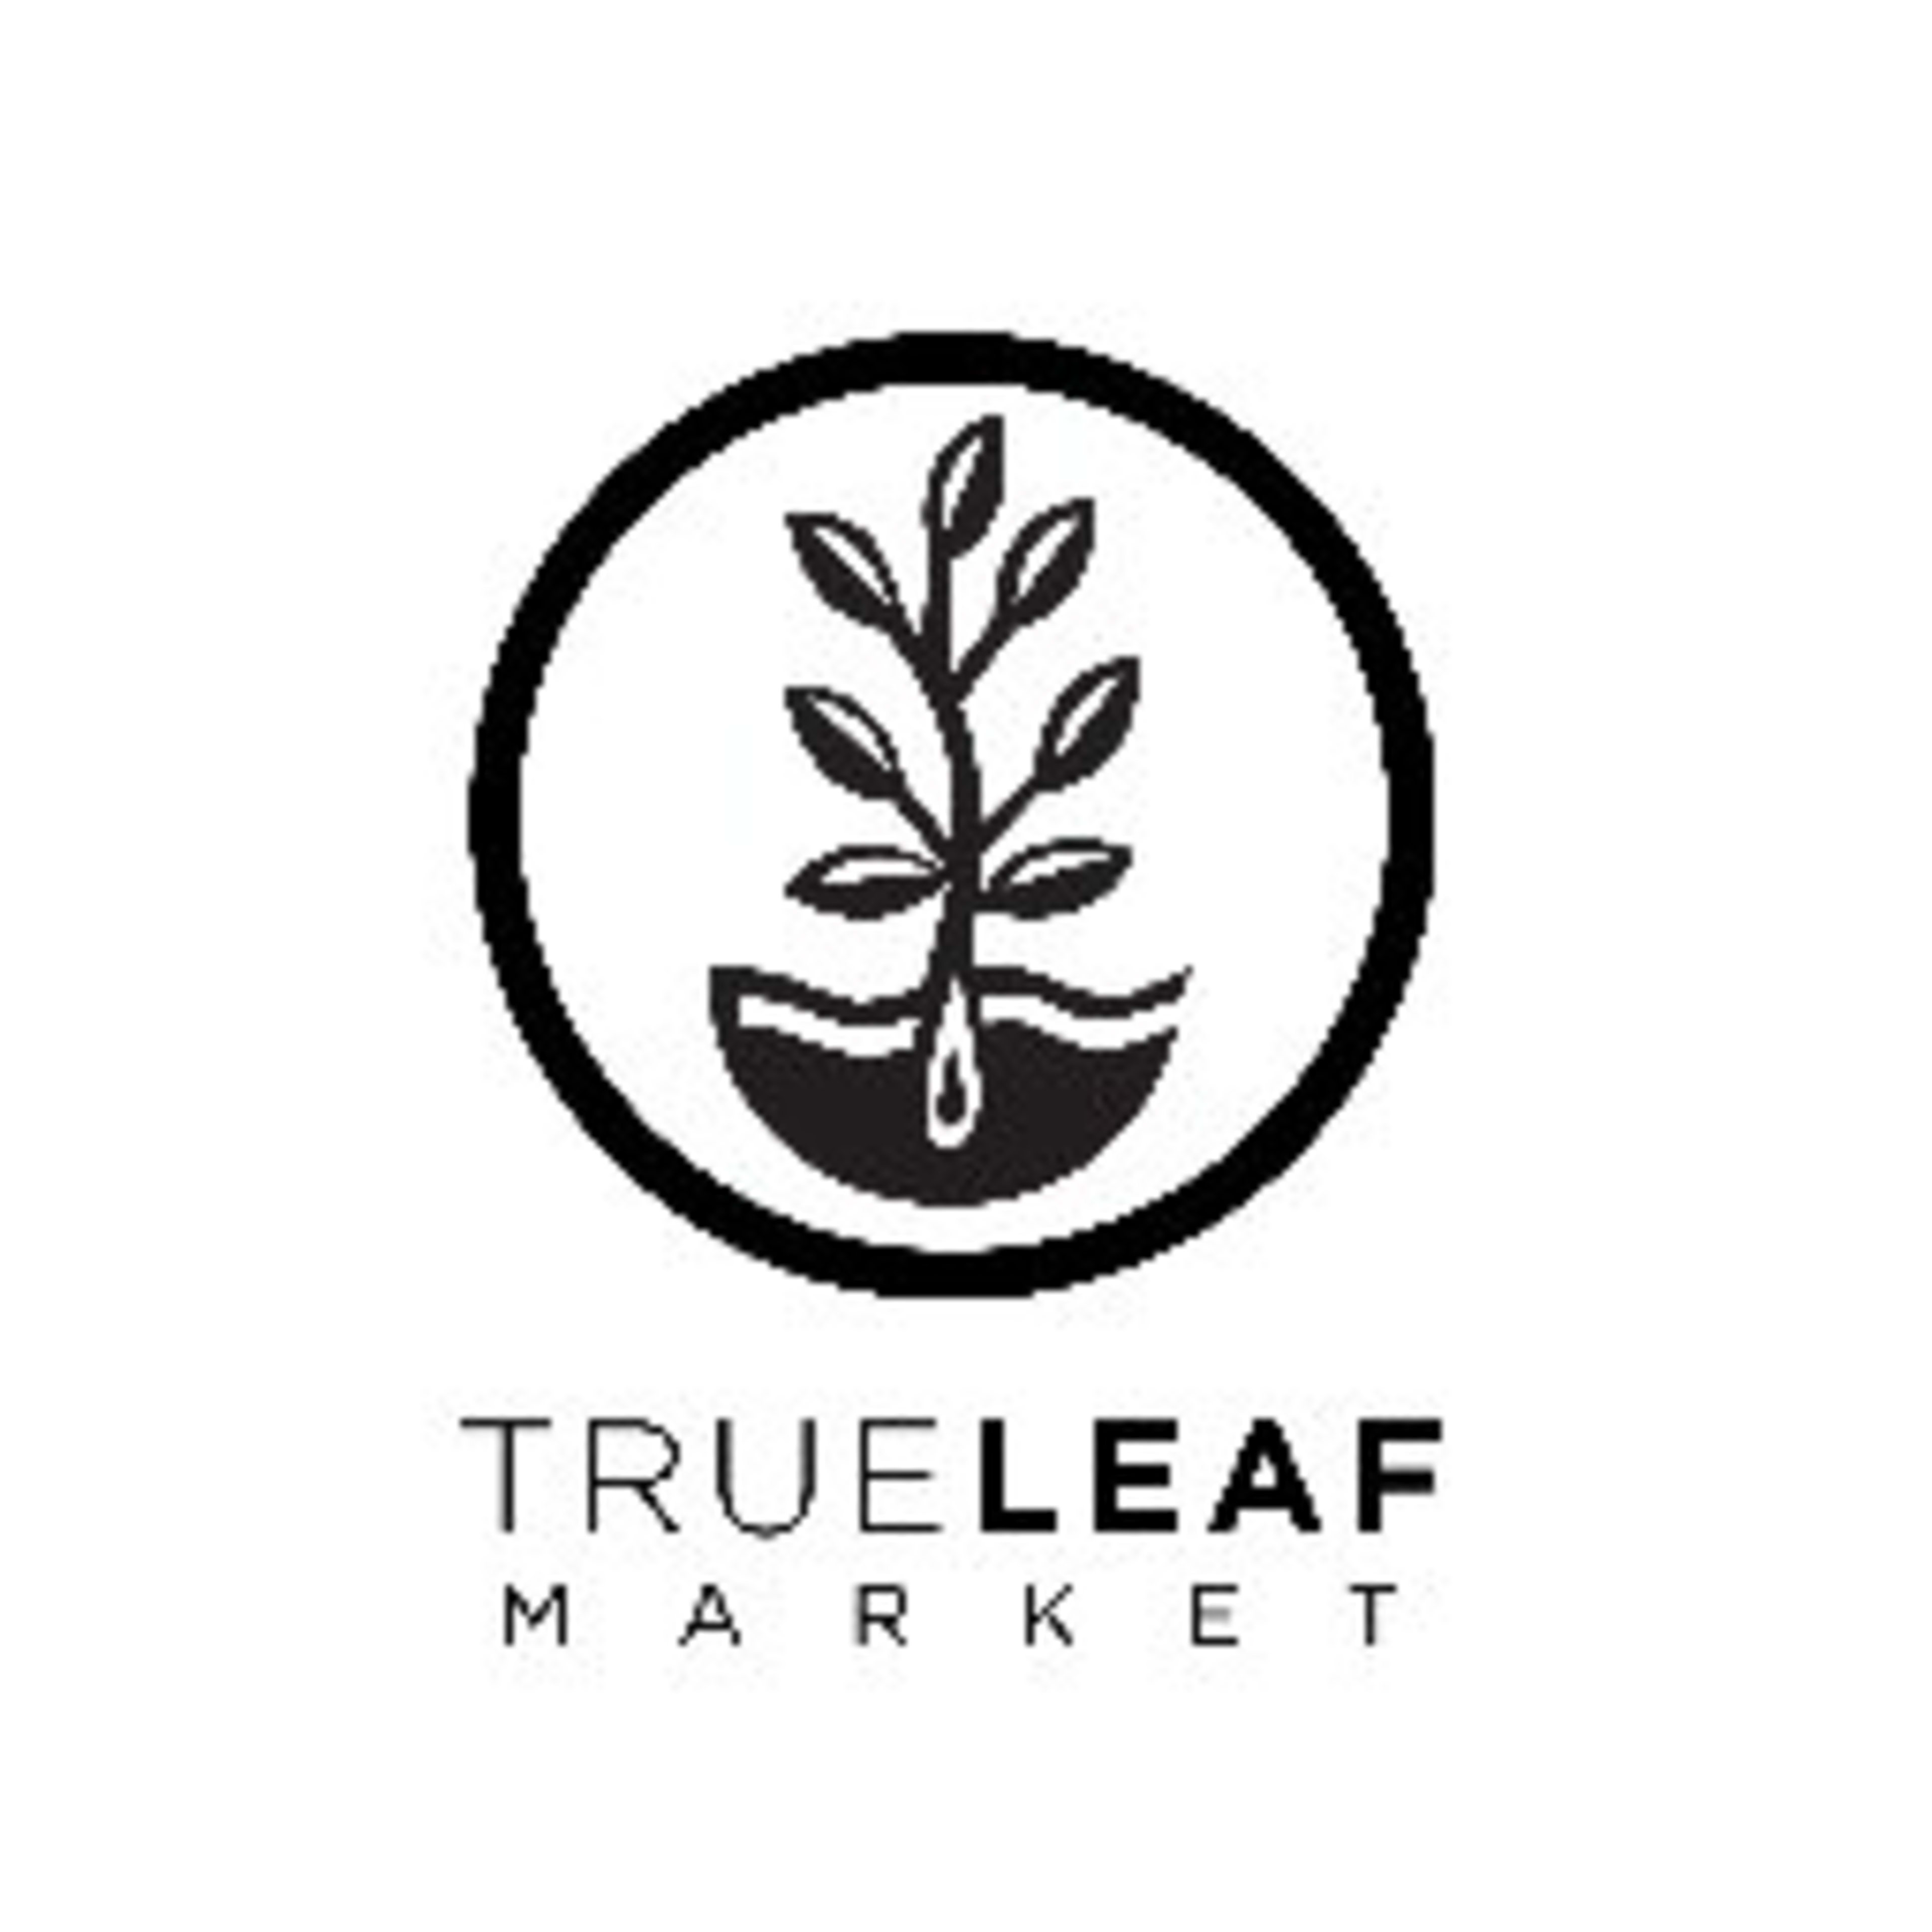 True Leaf MarketCode